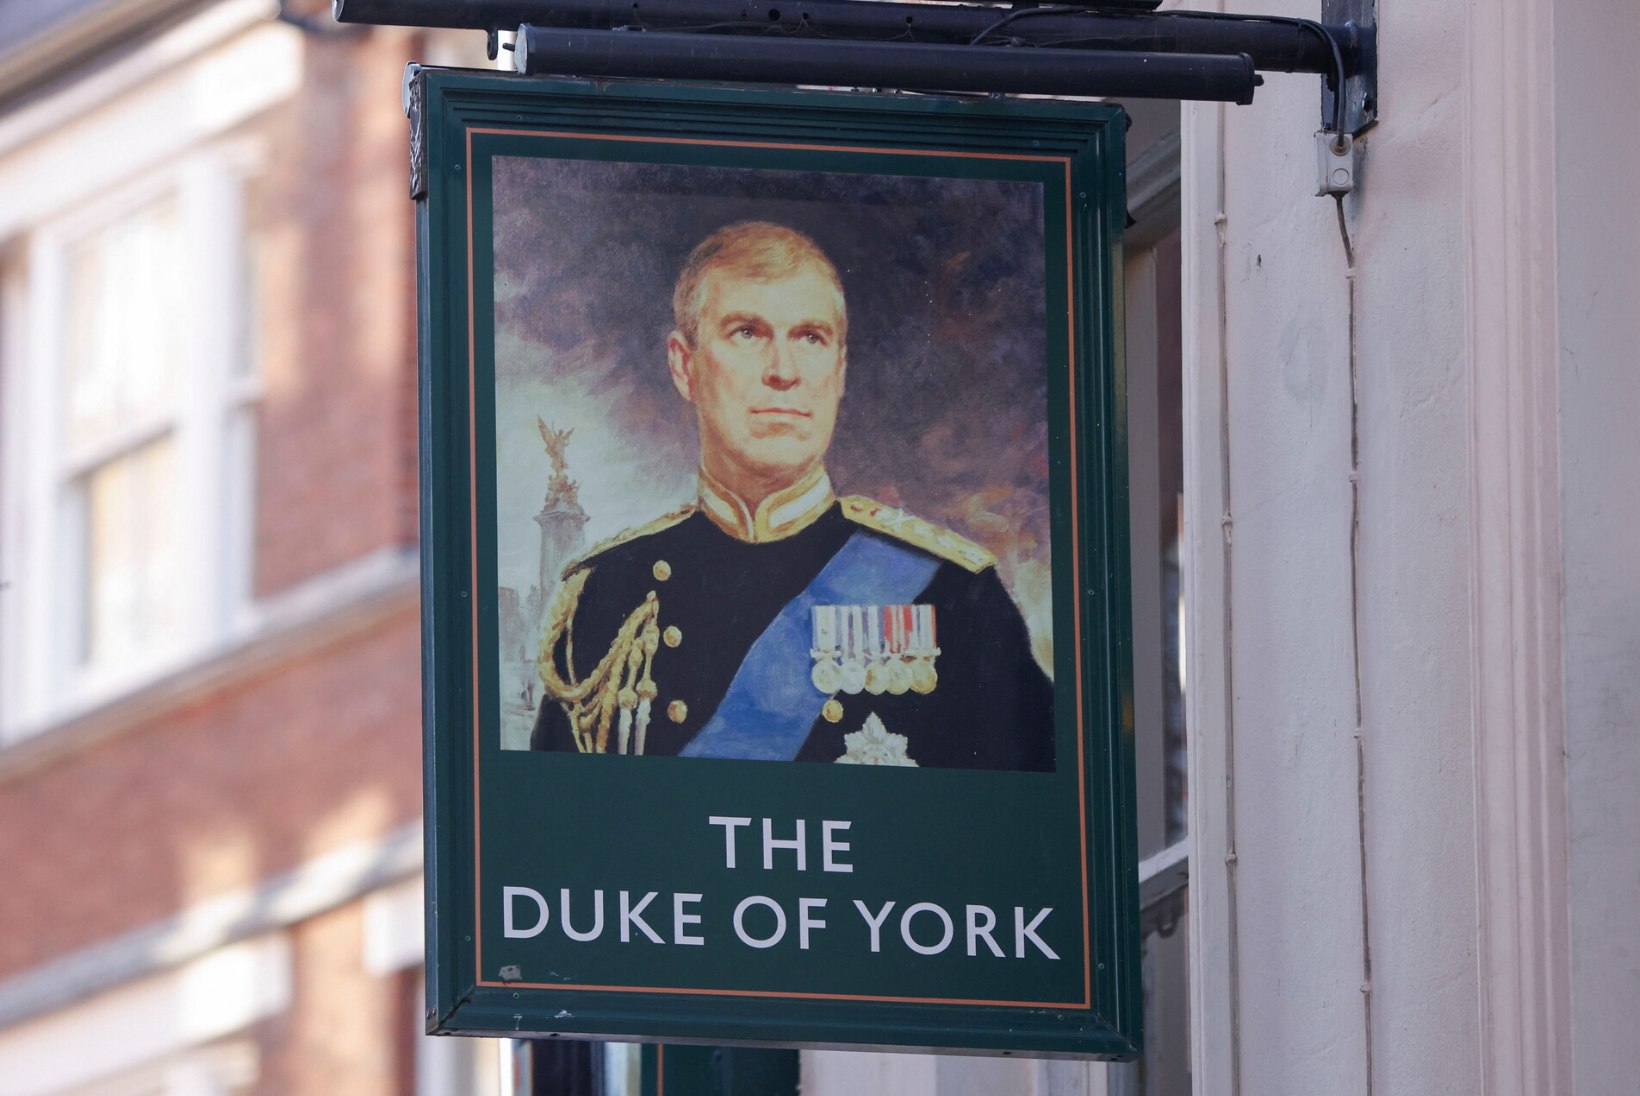 Yorki linn nõuab, et häbistatud prints Andrew'lt võetaks Yorki hertsogi tiitel